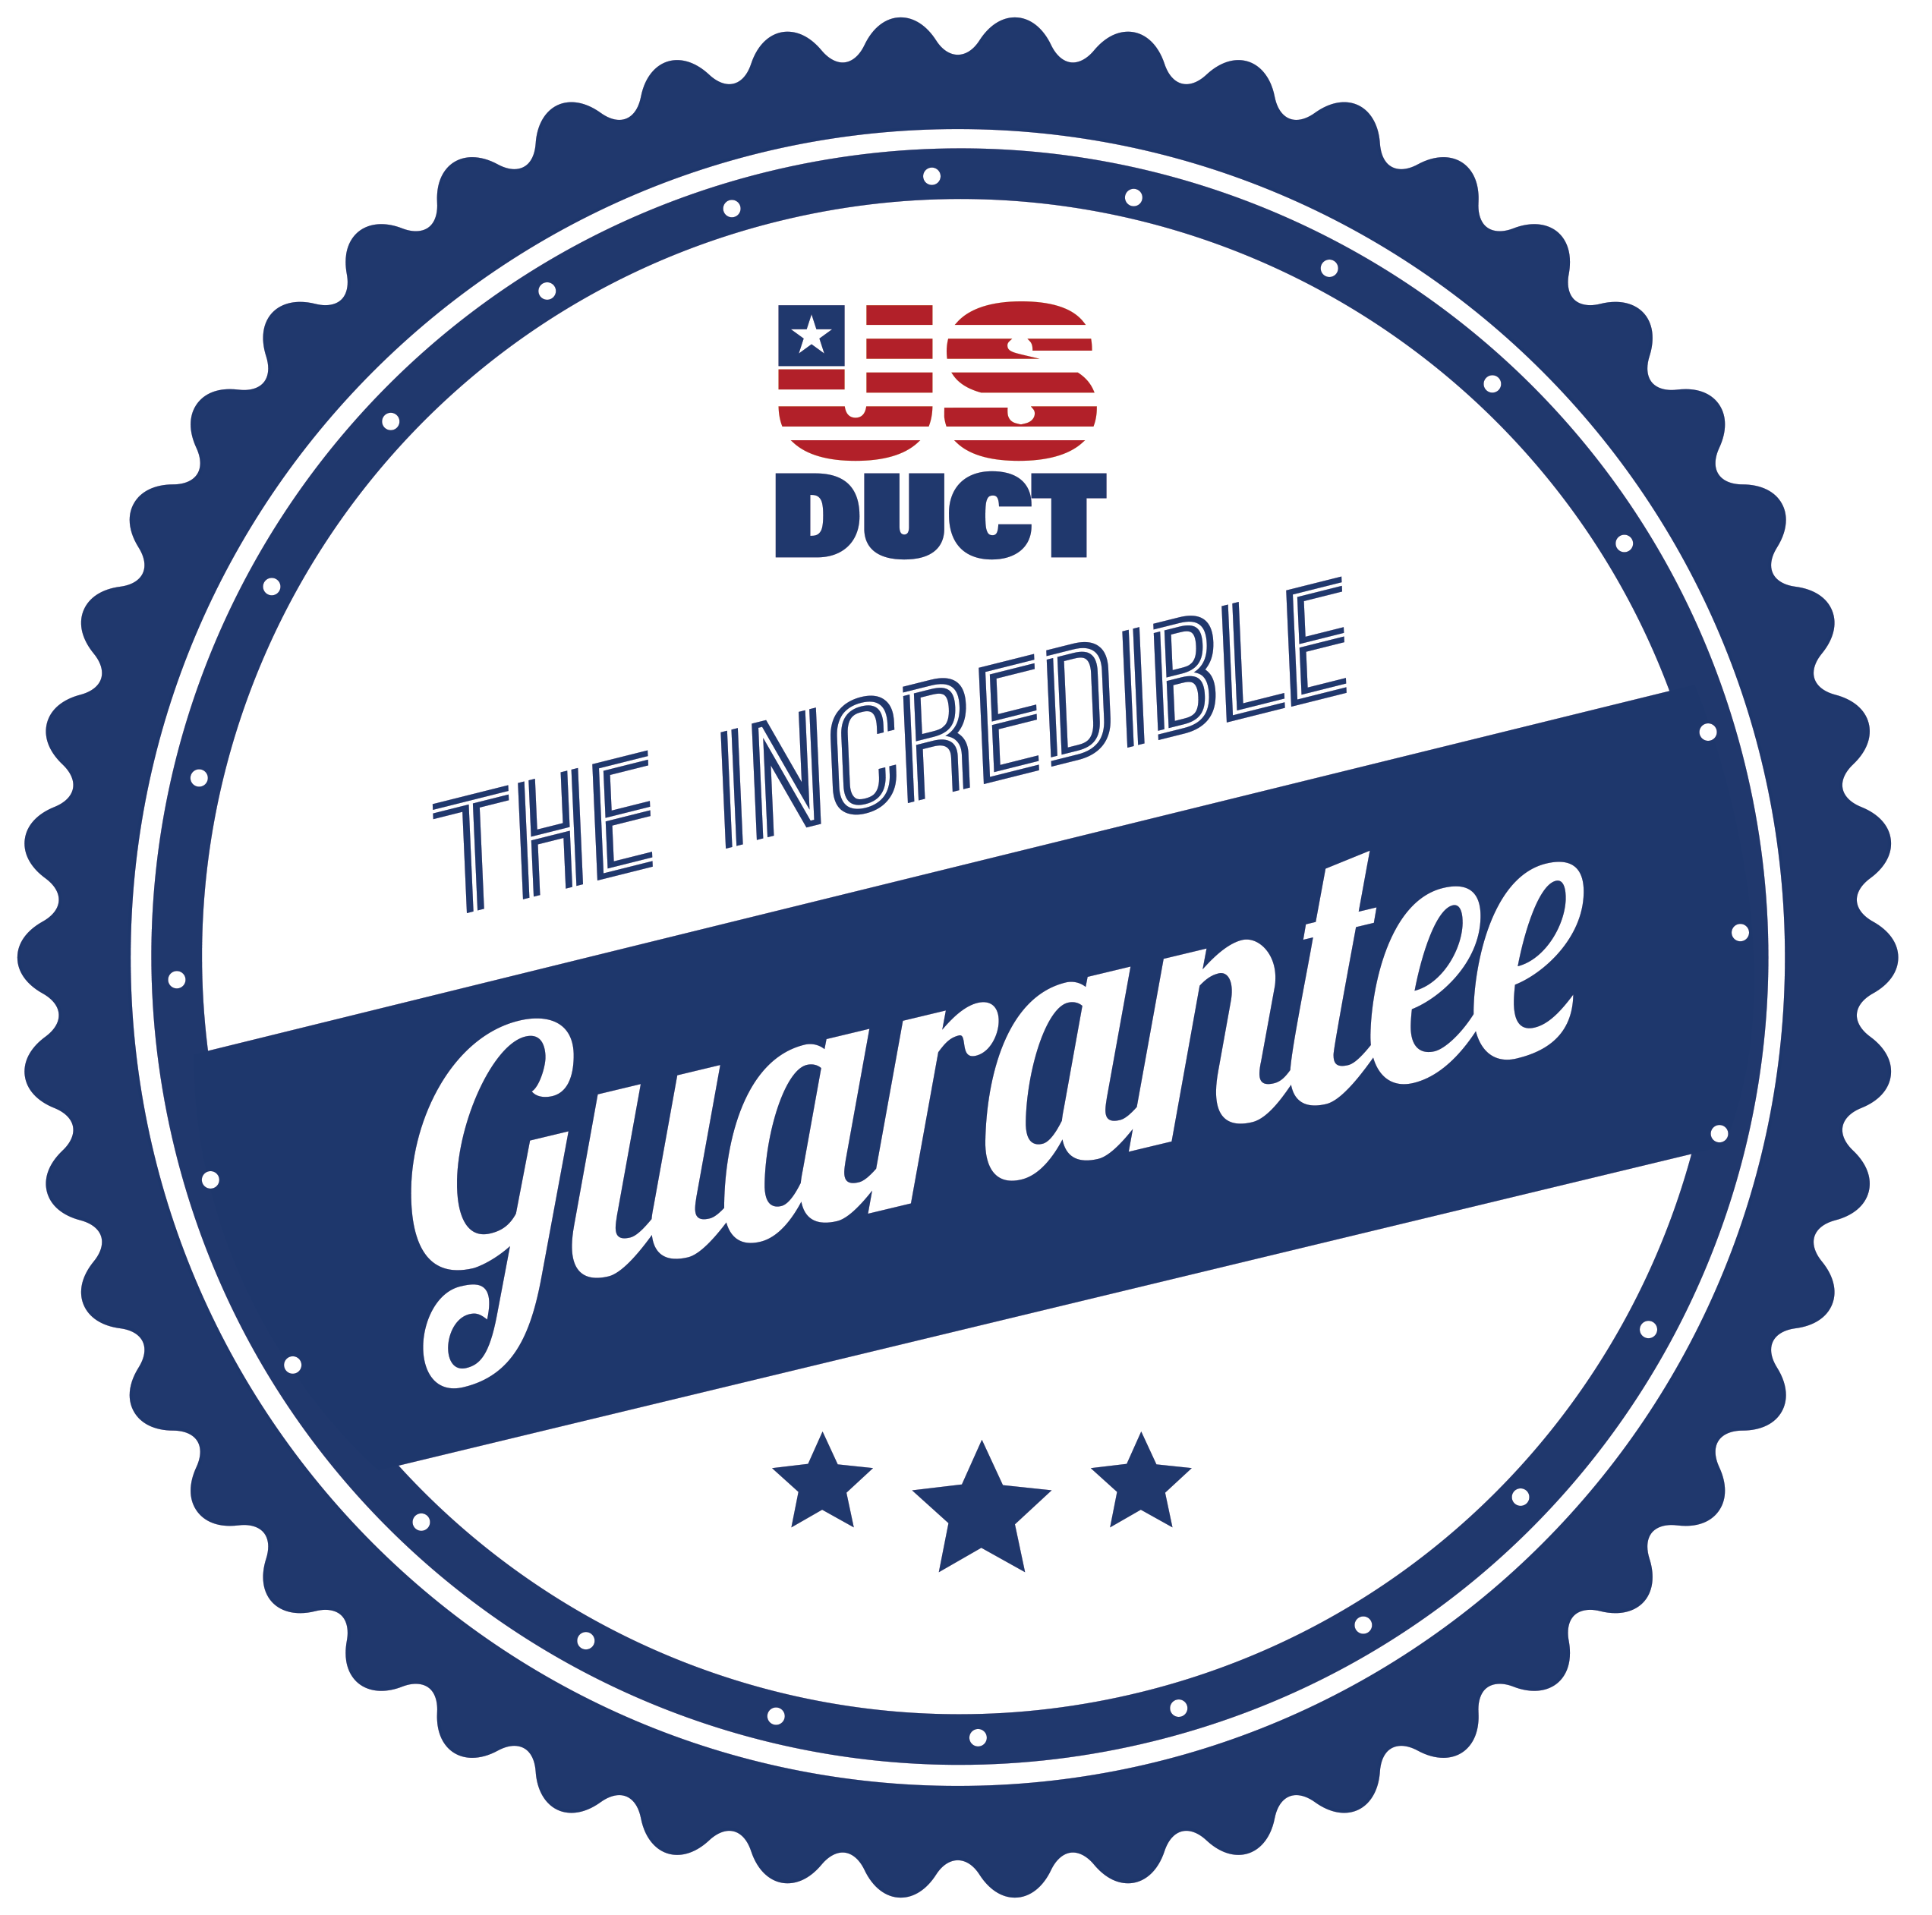 US Duct Incredible Guarantee to customers